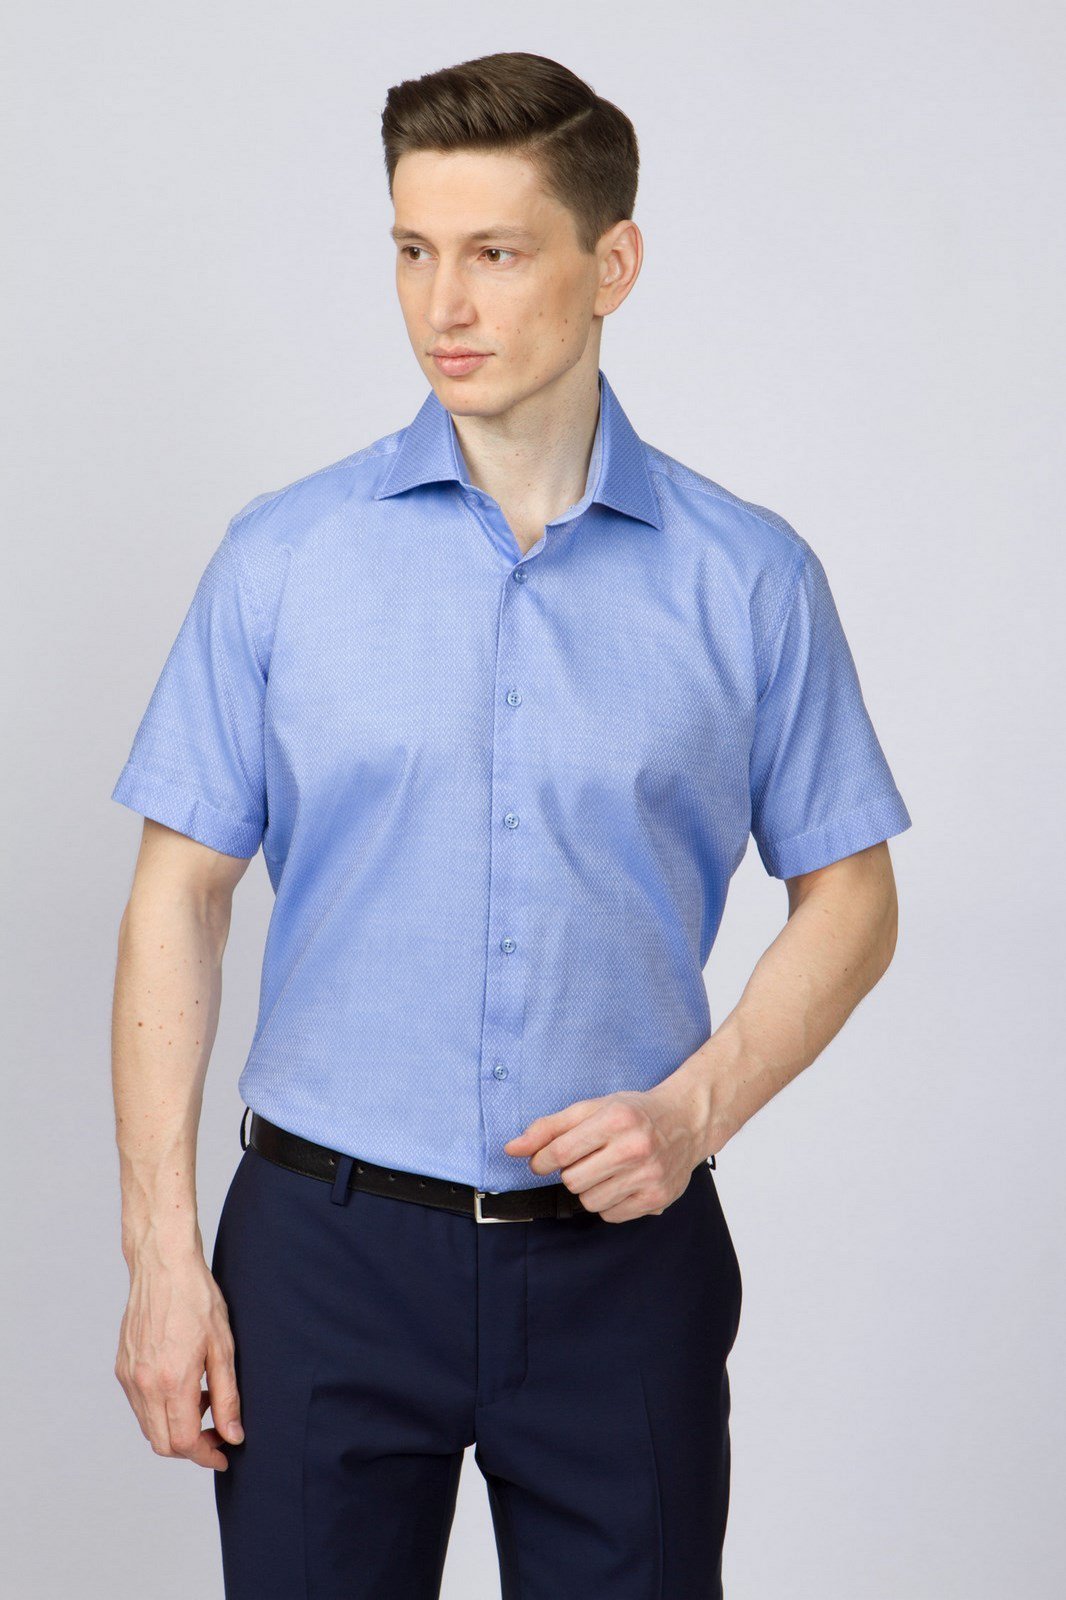 Рубашка с коротким рукавом. Рубашка мужская. Голубая рубашка. Рубашка с коротким рукавом мужская. Голубая рубашка мужская с коротким рукавом.